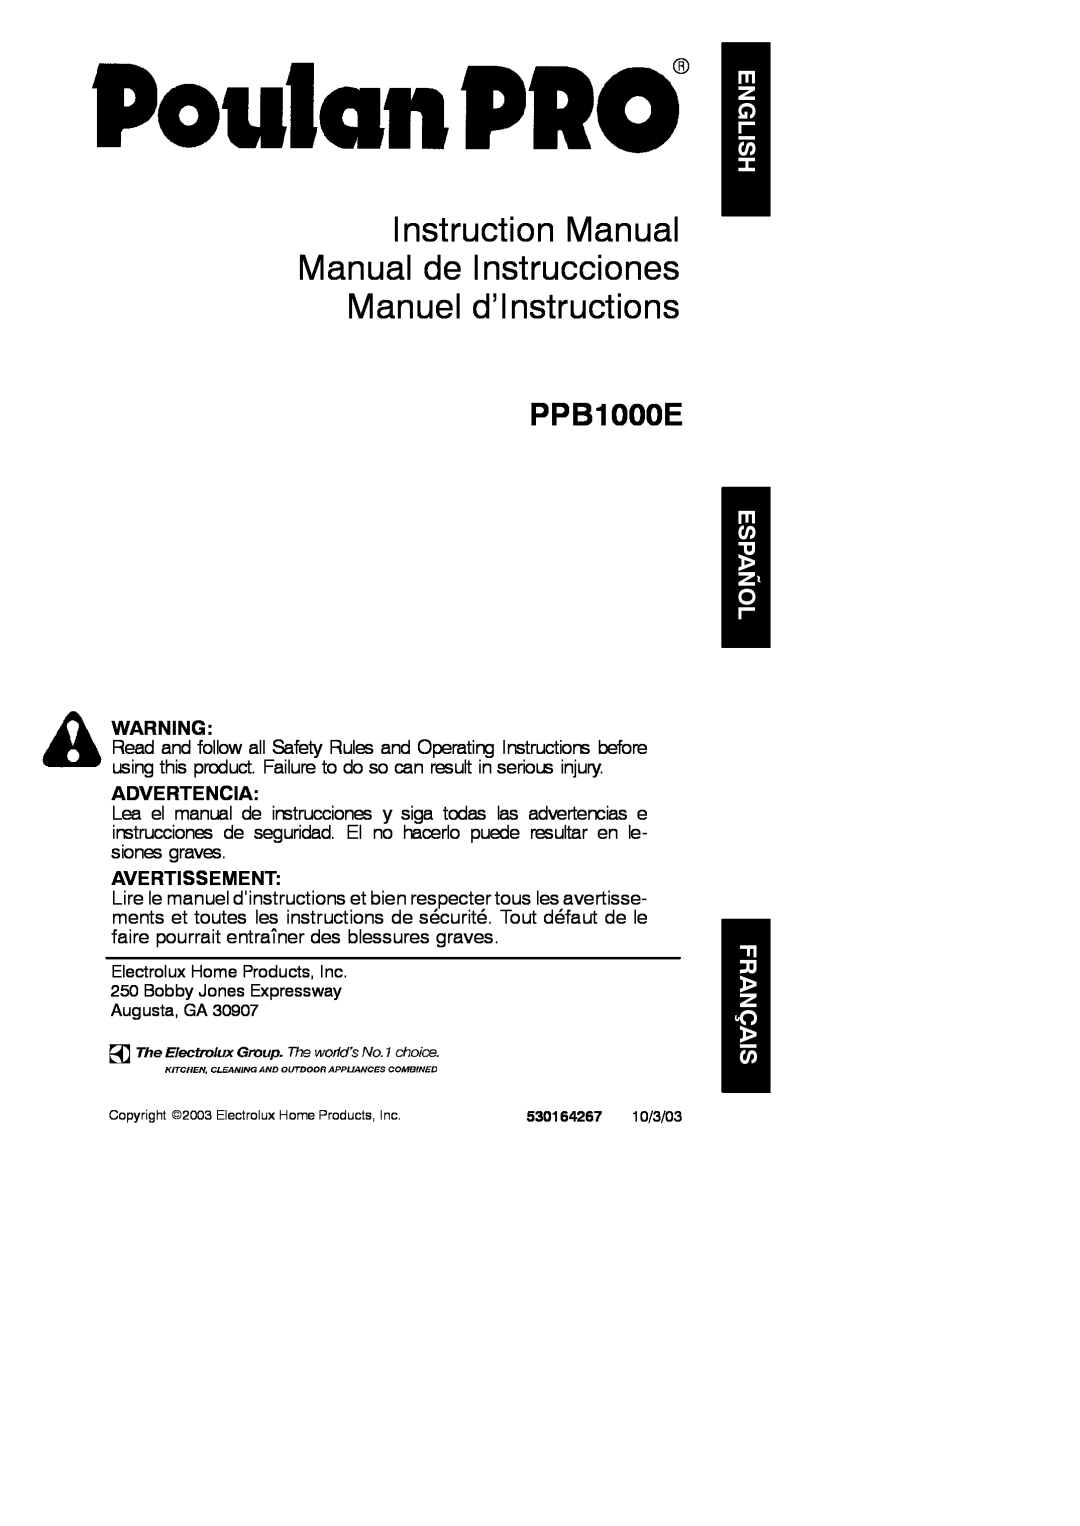 Poulan 530164267 instruction manual English, Español, Français, Advertencia, Avertissement, PPB1000E 